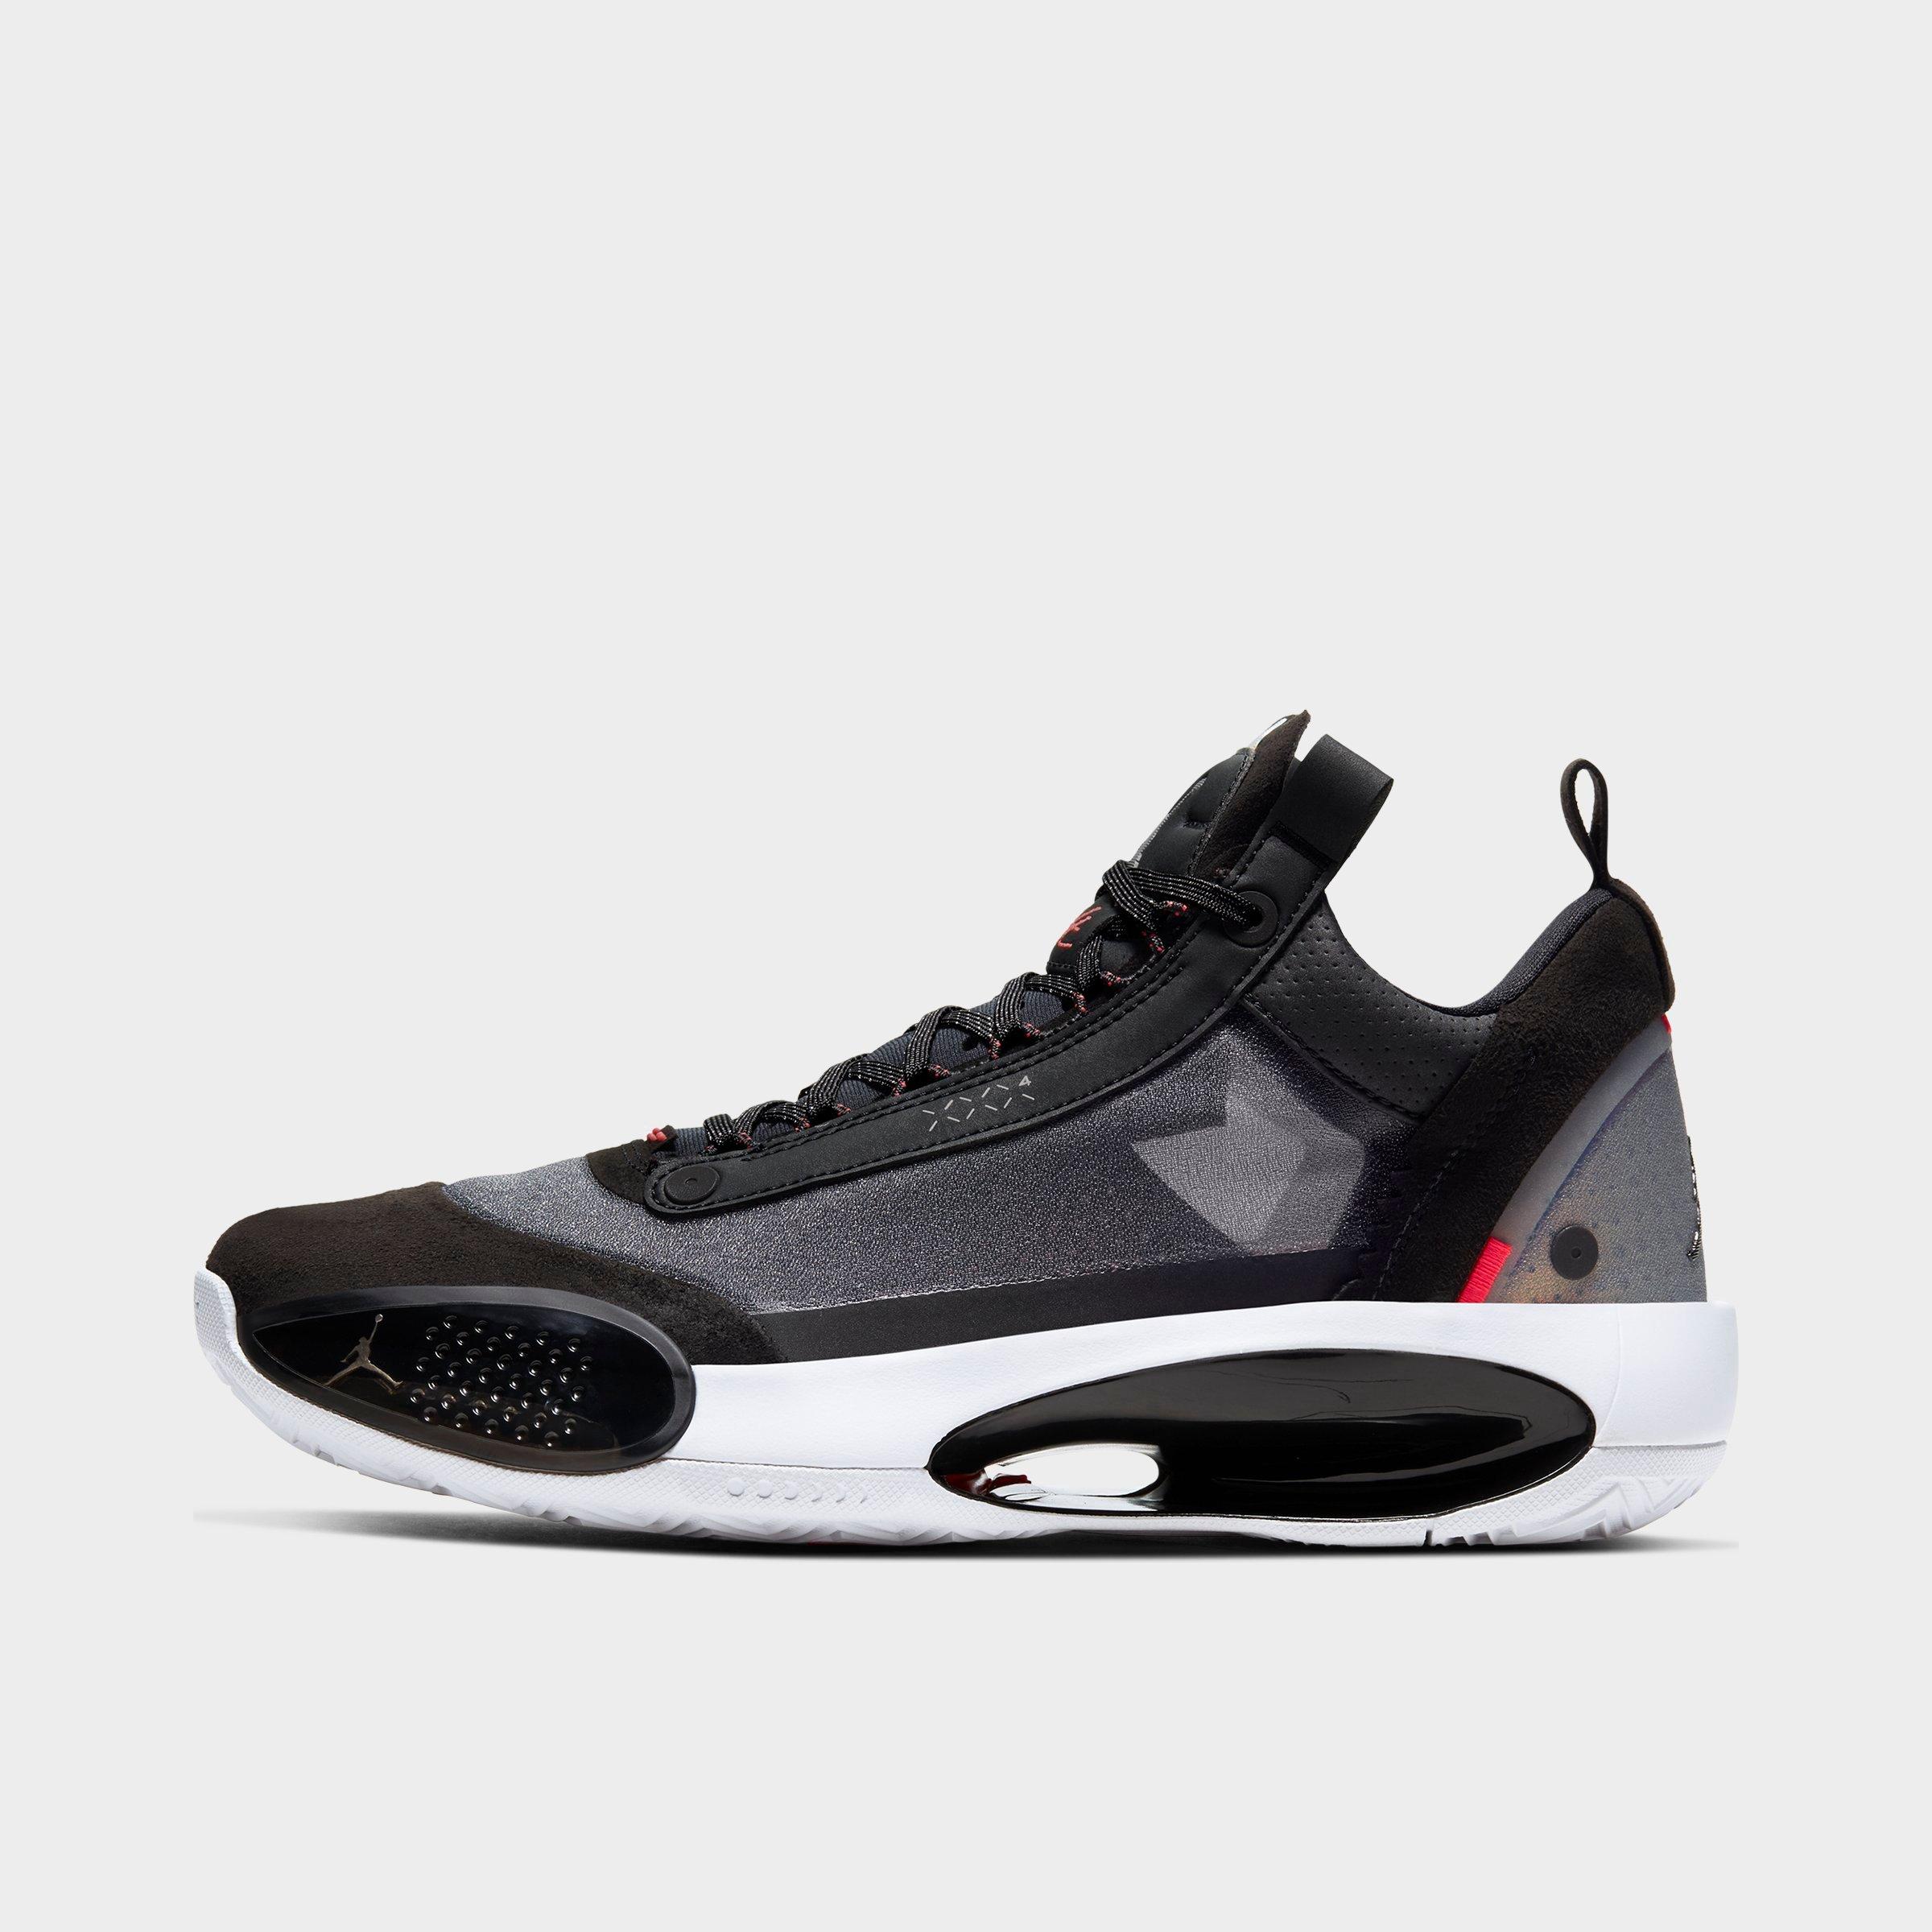 Air Jordan XXXIV Low Basketball Shoes 